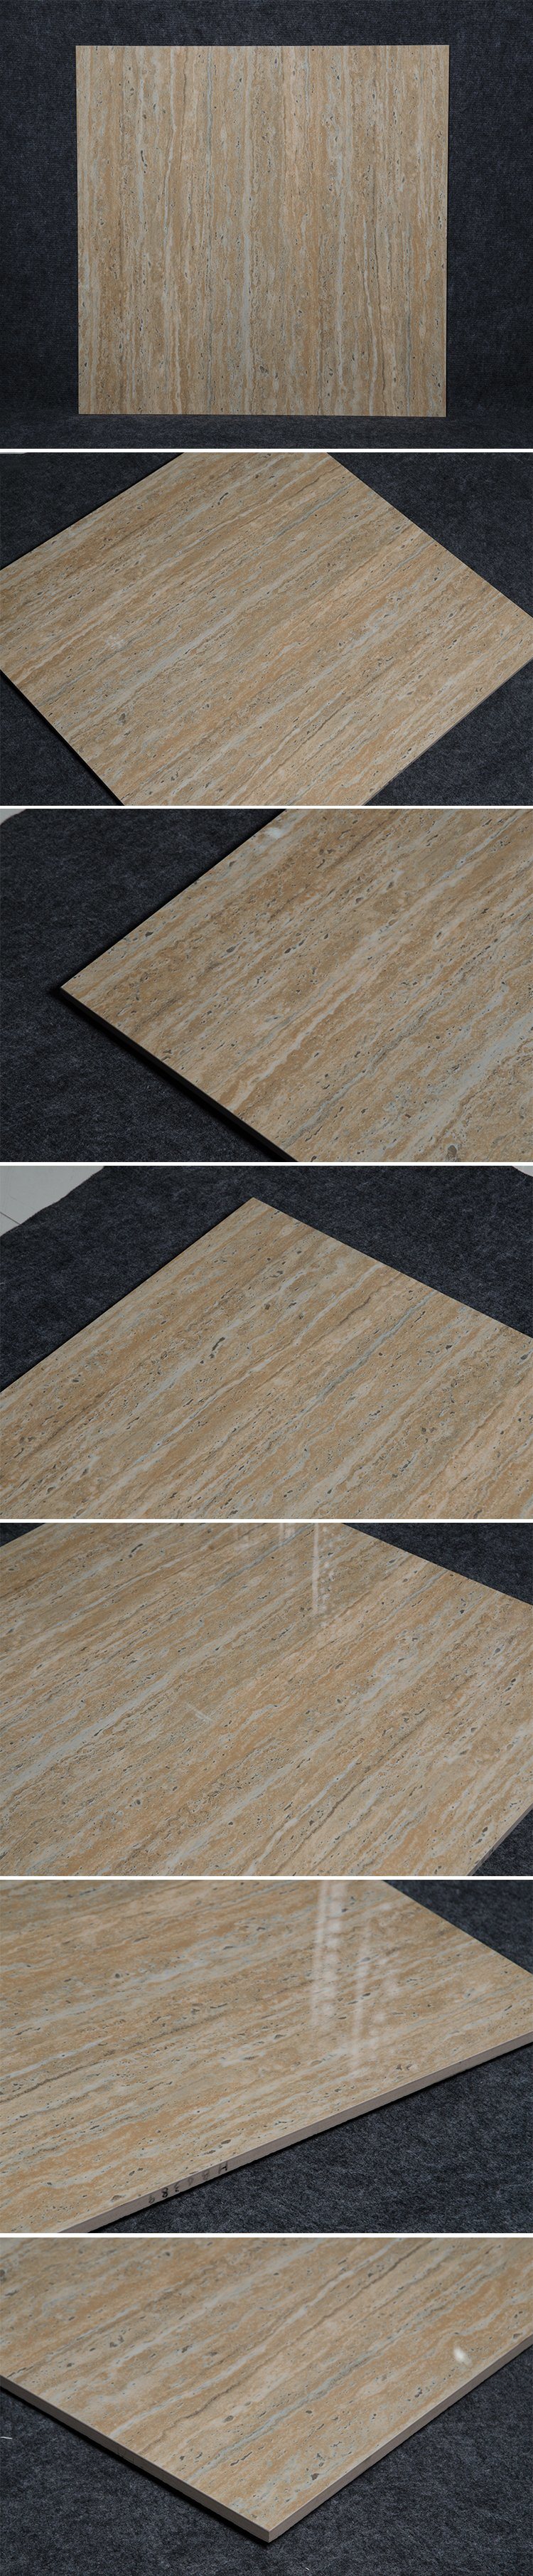 60X60 Turkish Travertine Tile for Bathroom Floor and Shower